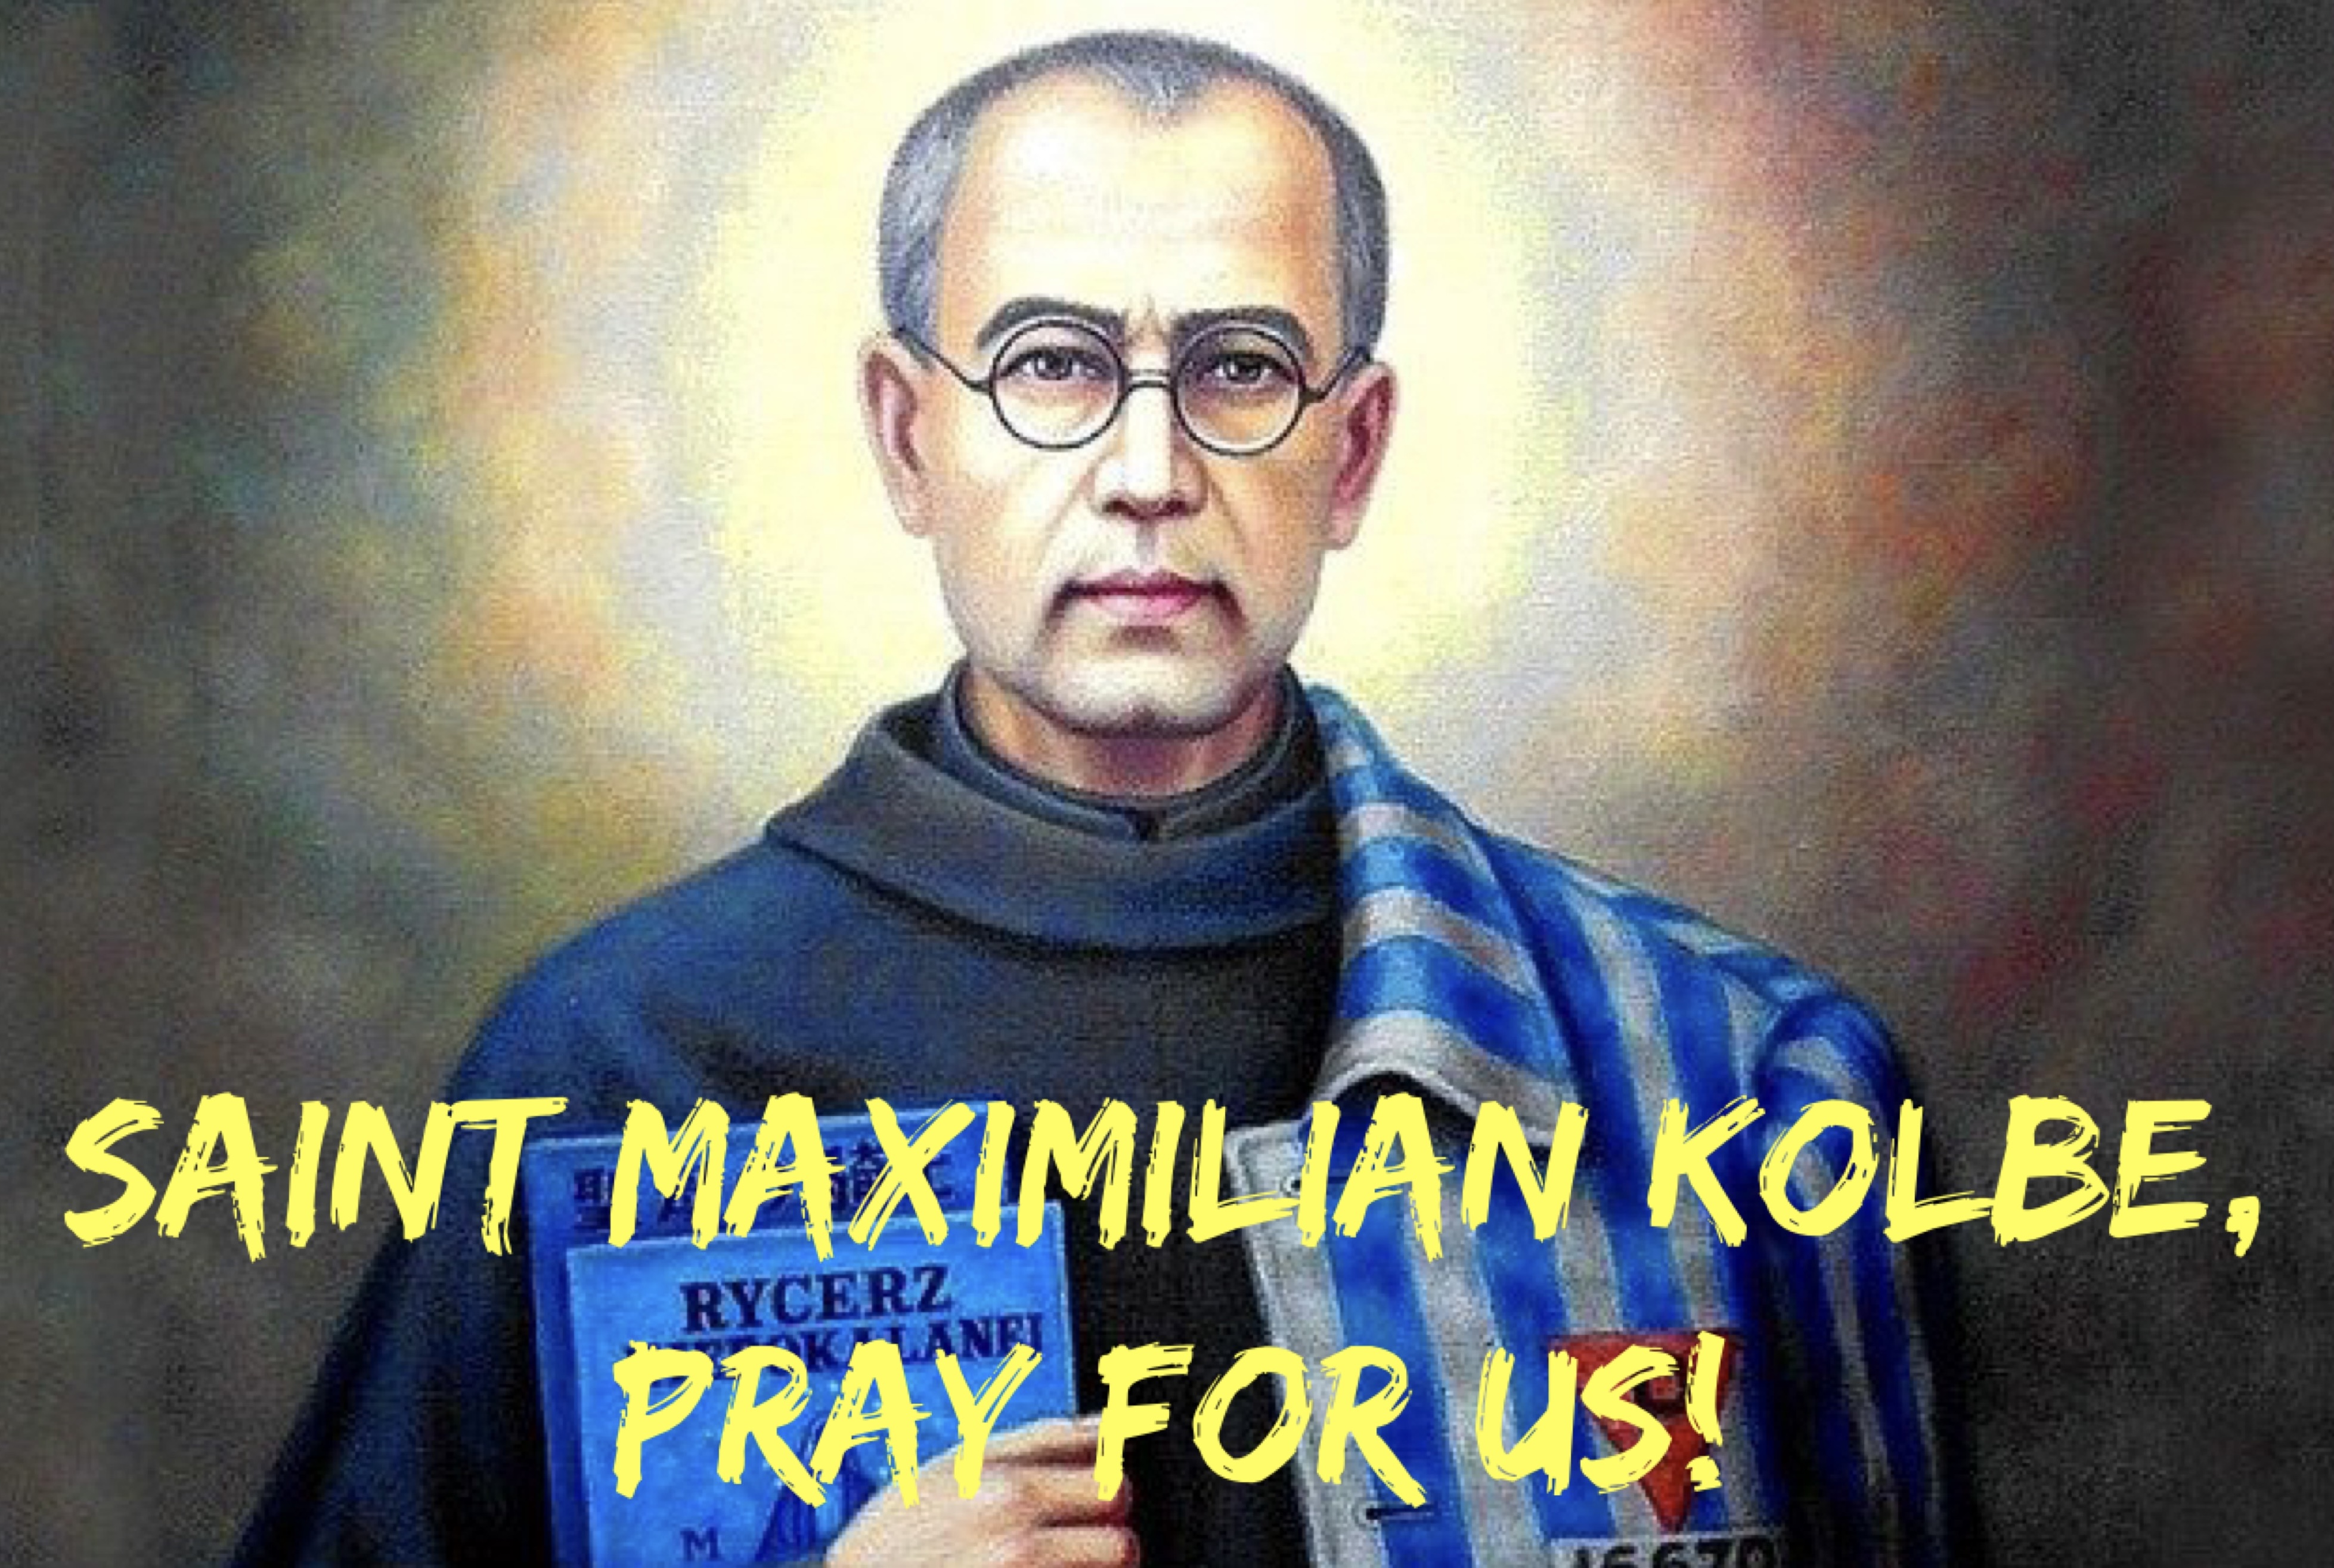 14th August - Saint Maximilian Kolbe